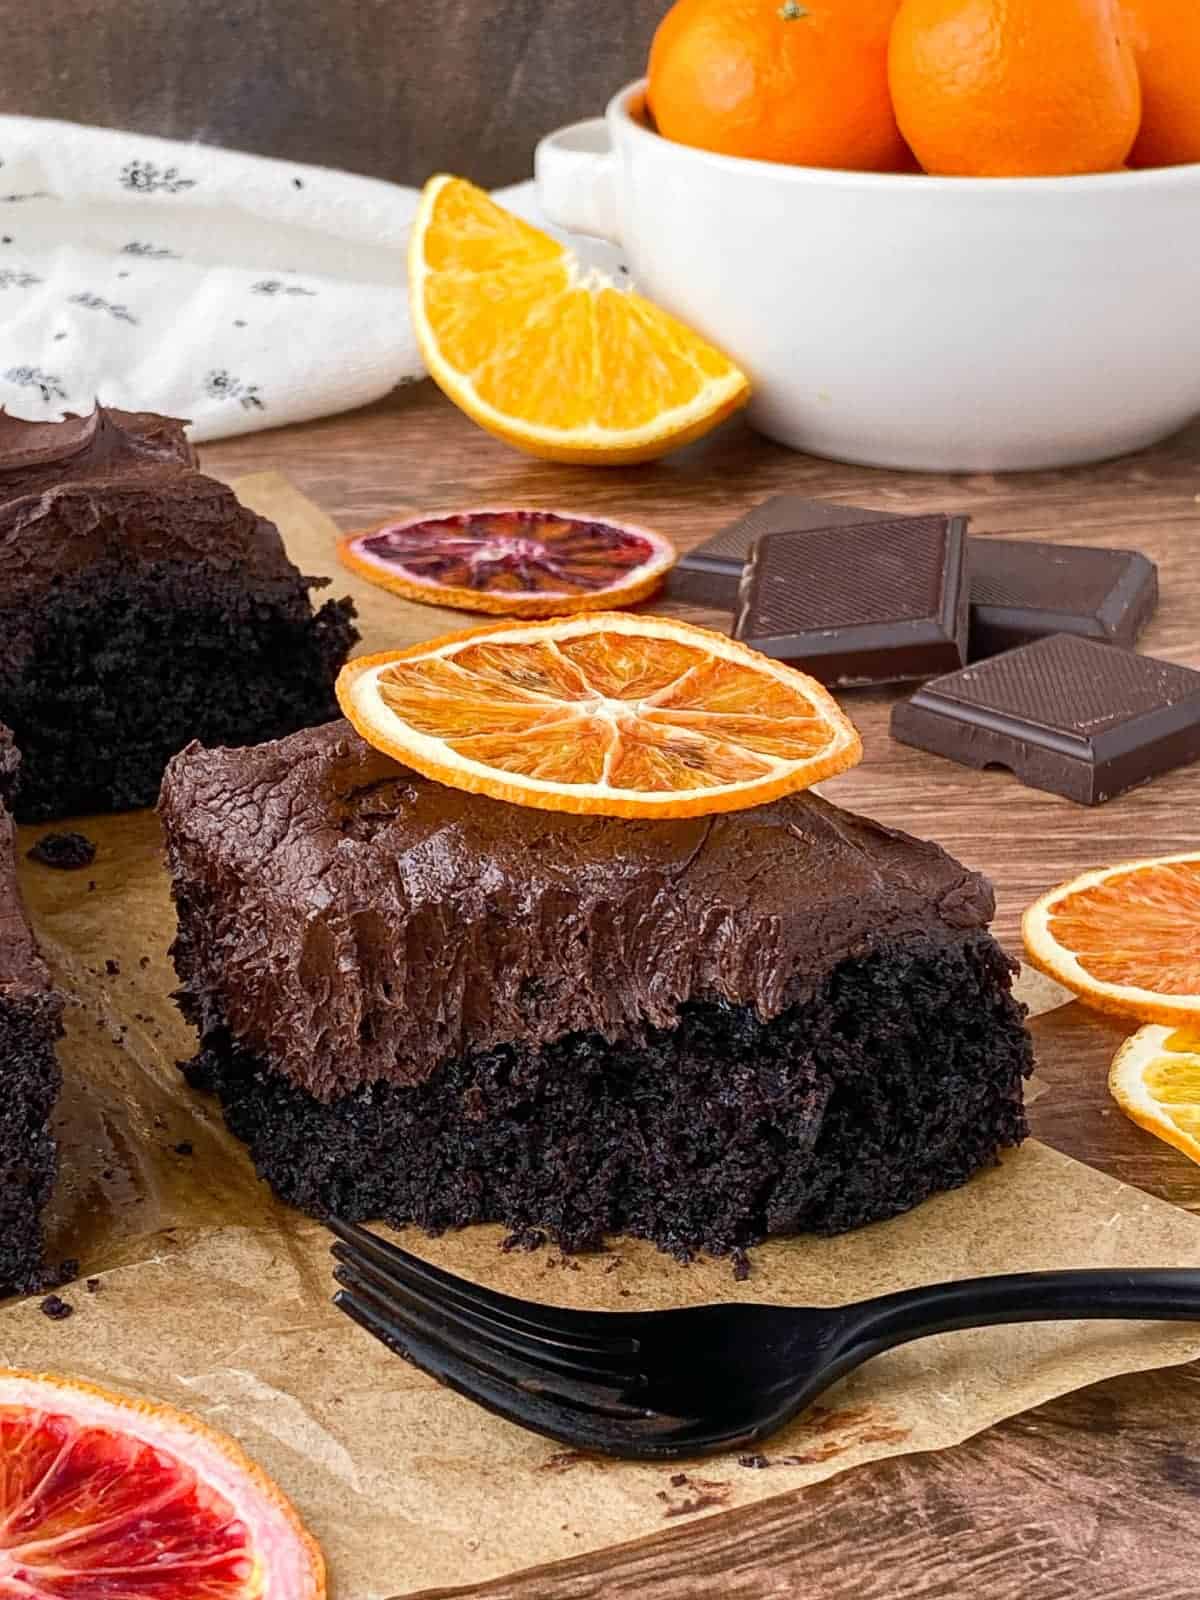 Slice of Chocolate Orange Cake with bite missing and a black fork alongside.